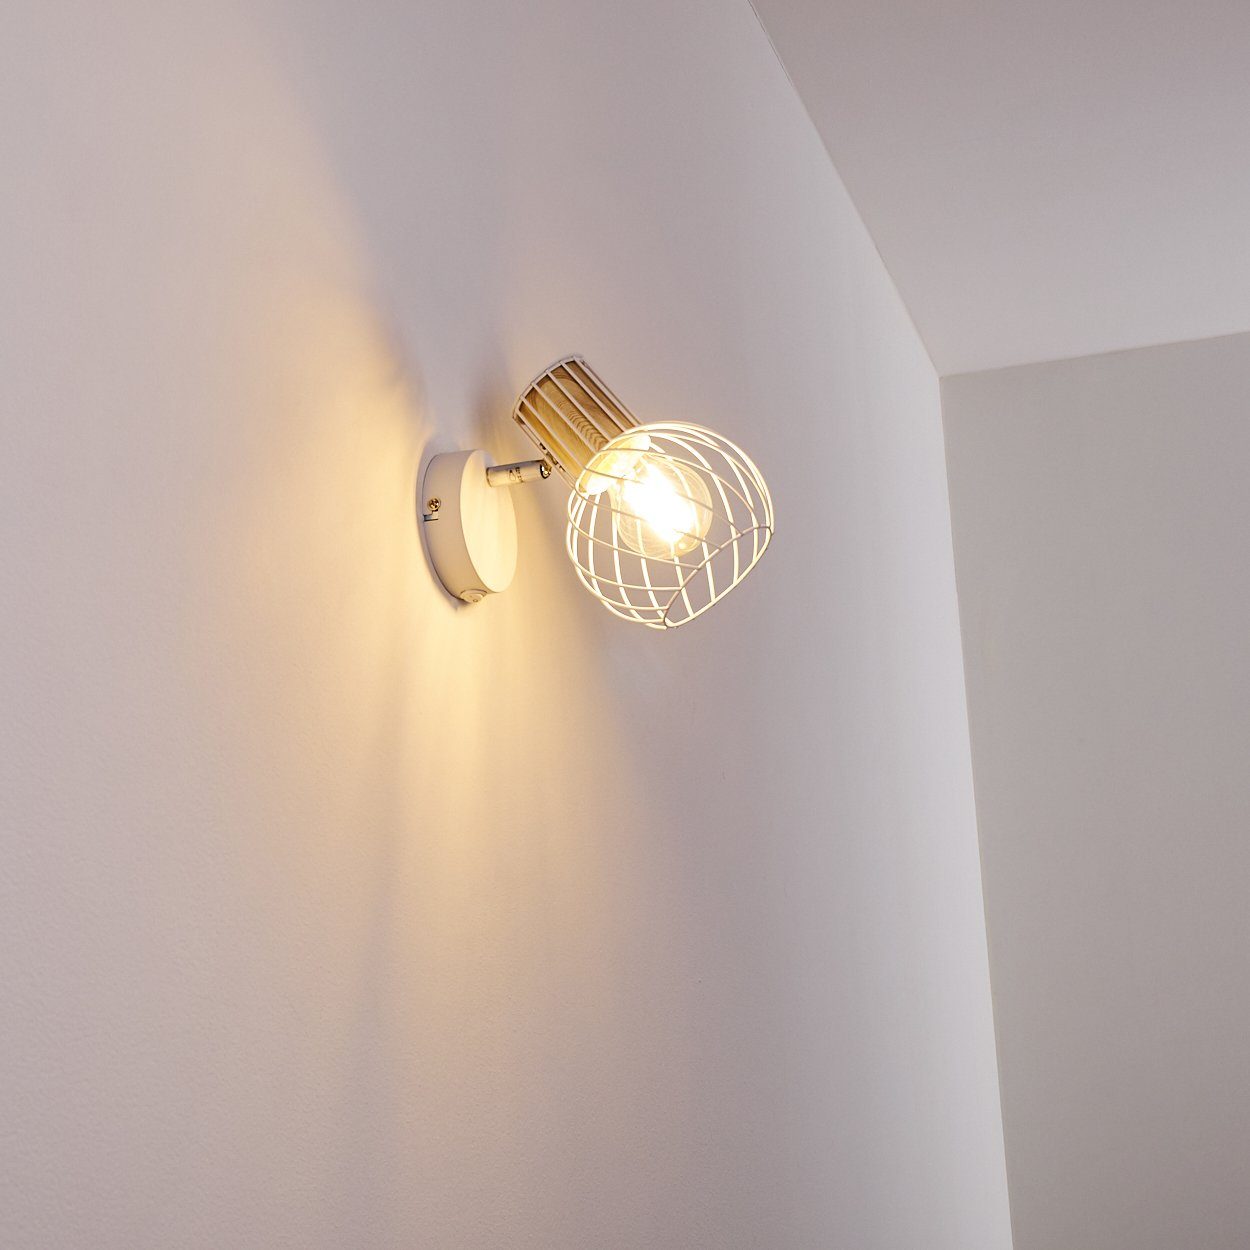 Weiß, ohne Wandleuchte Metall/Holz An-/Ausschalter, Leuchtmittel, »Dezzo« Gitter-Optik E27, Wandlampe aus Lichteffekt Wandspot, in hofstein durch verstellbare